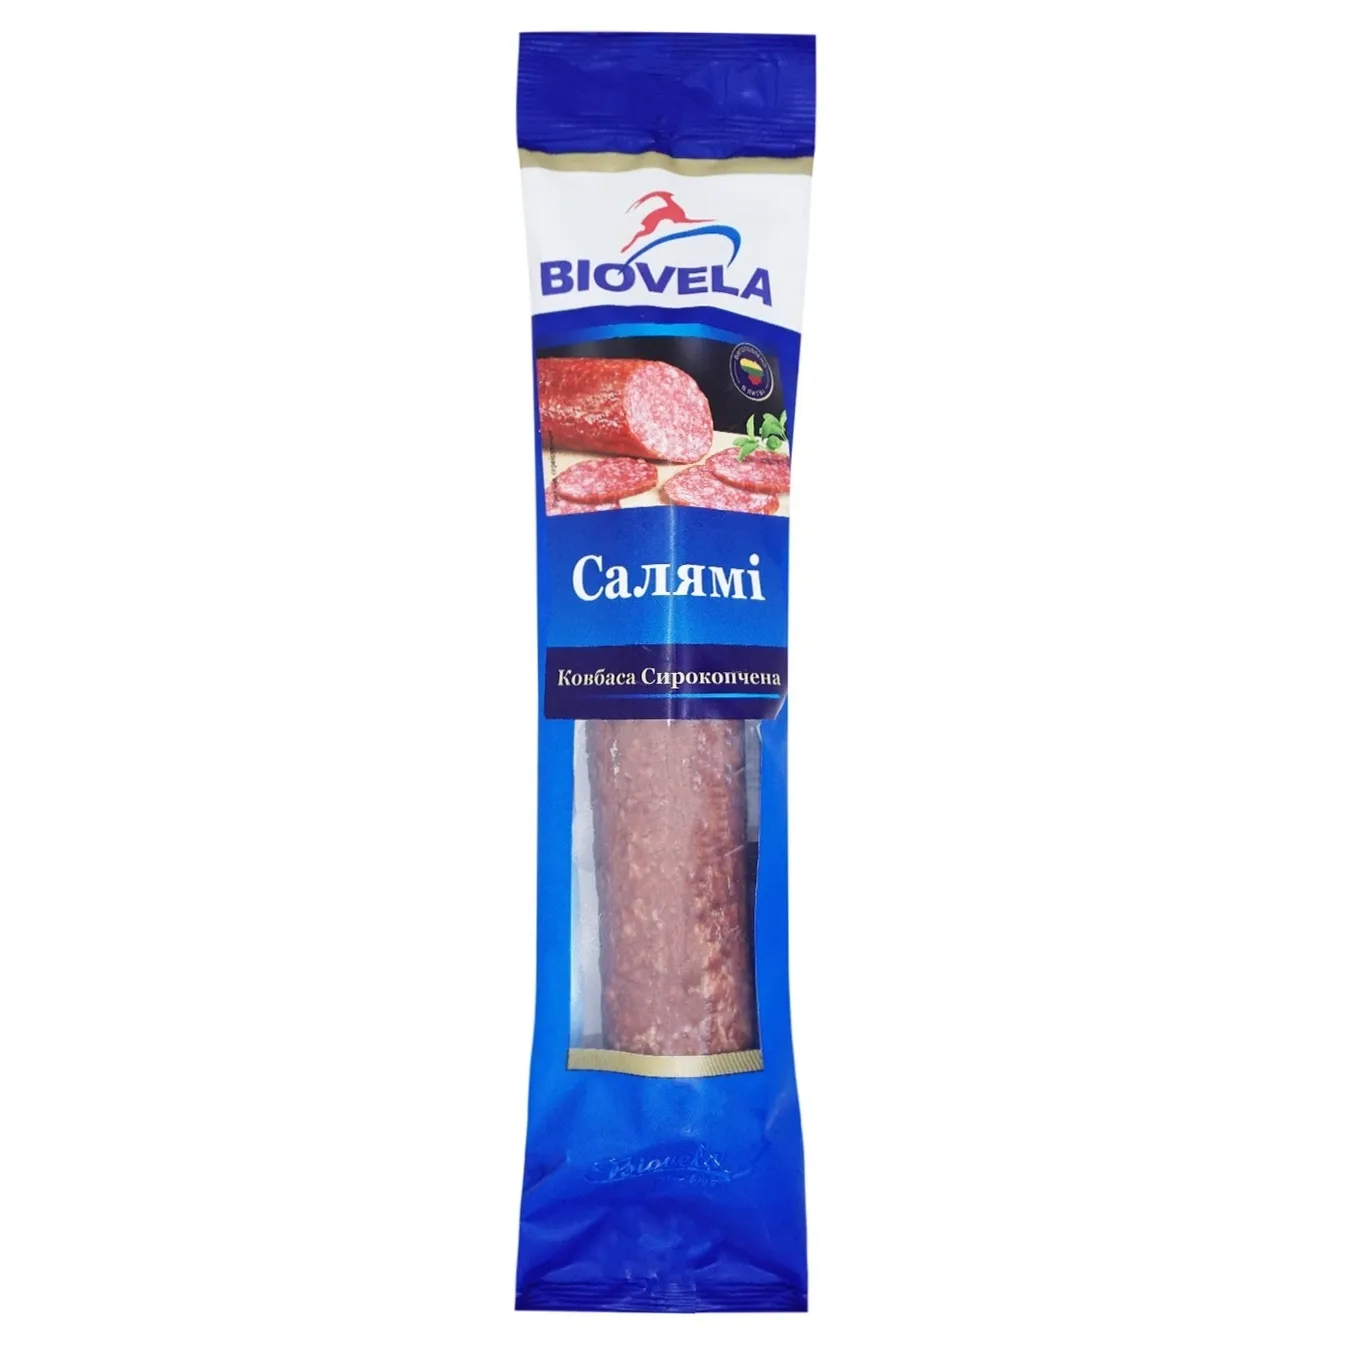 Biovela Salami sausage raw smoked 230g